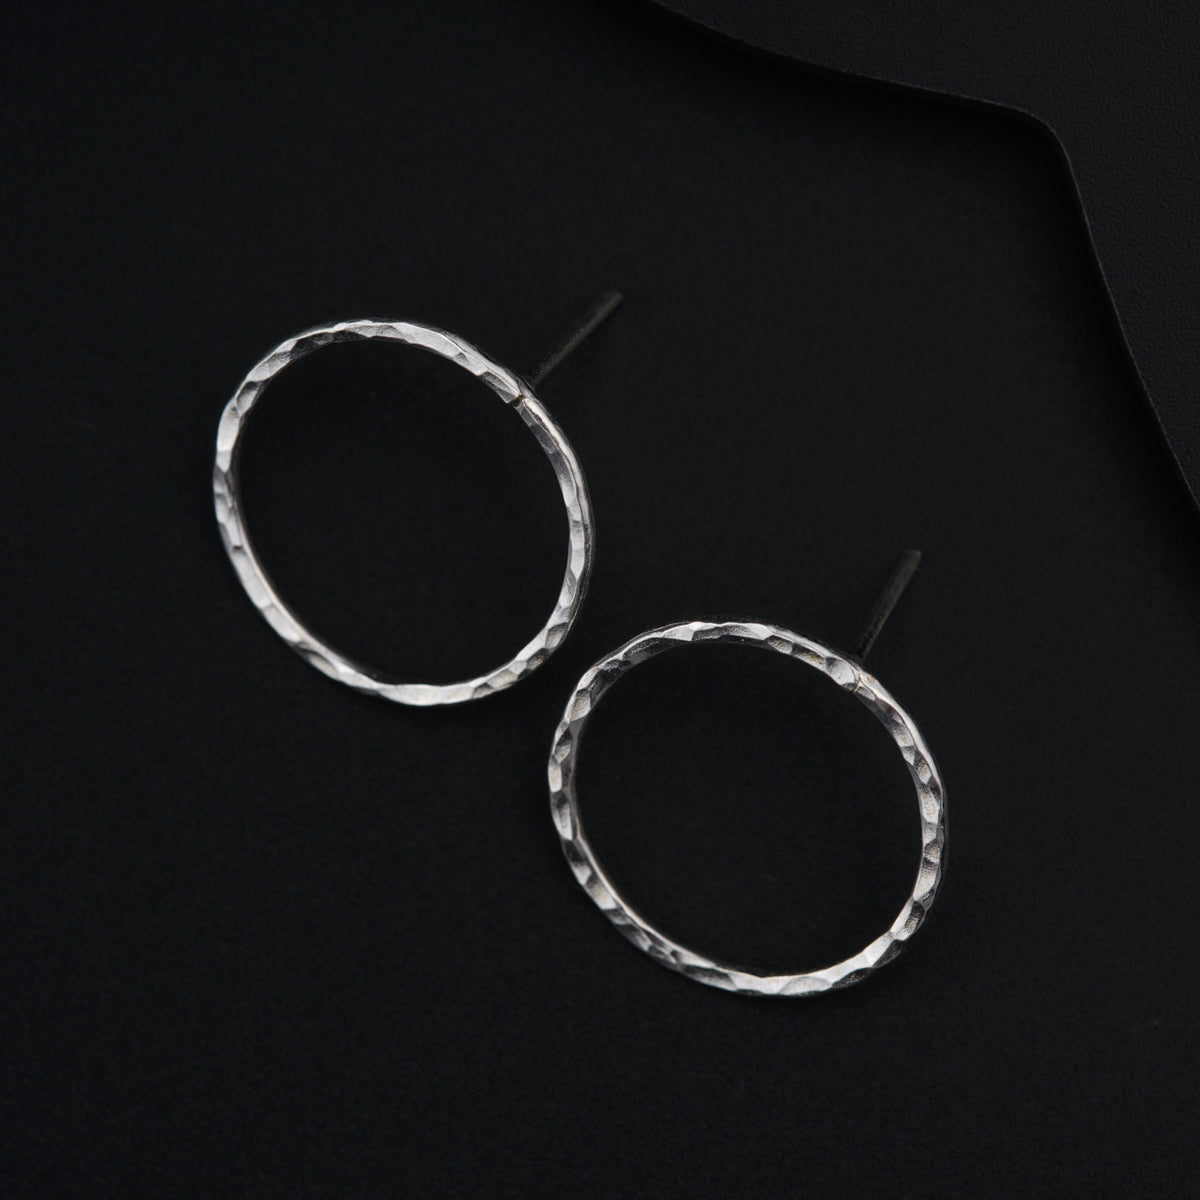 a pair of silver hoop earrings on a black background